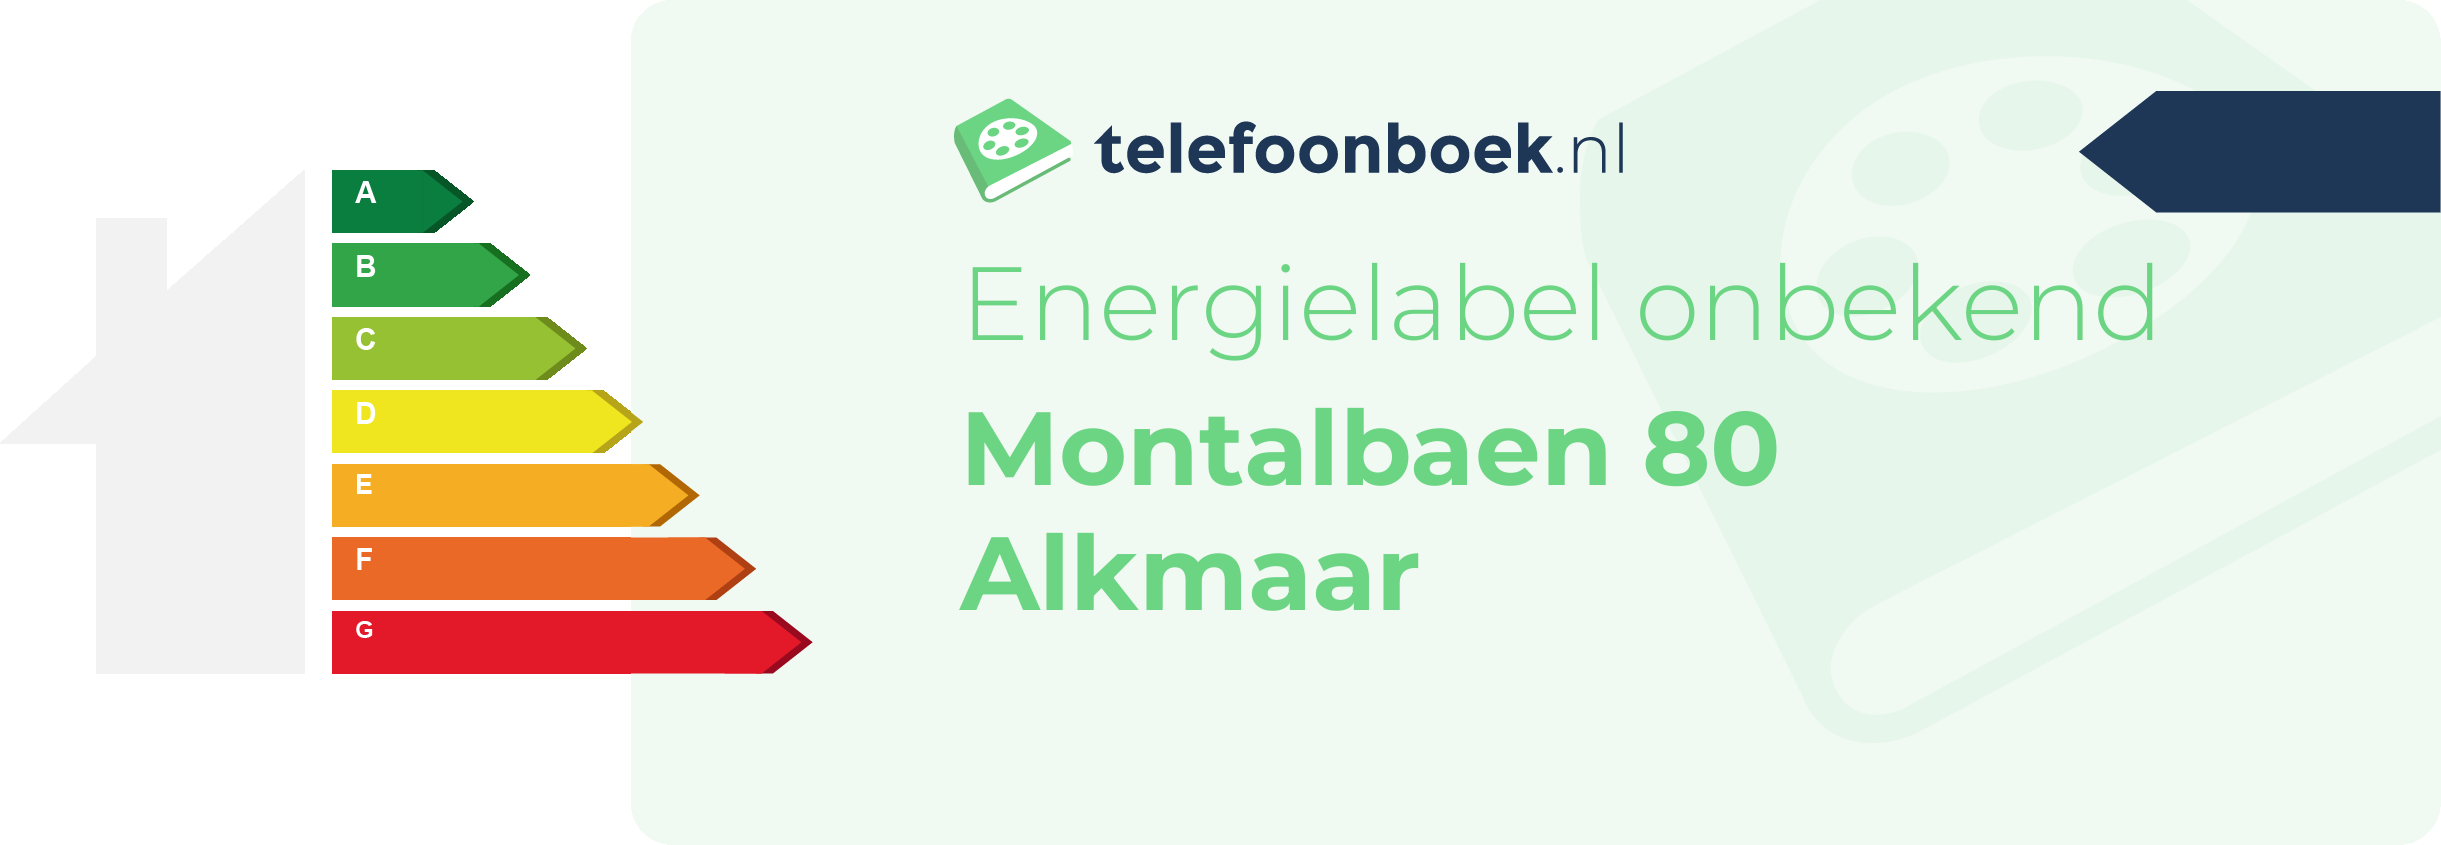 Energielabel Montalbaen 80 Alkmaar